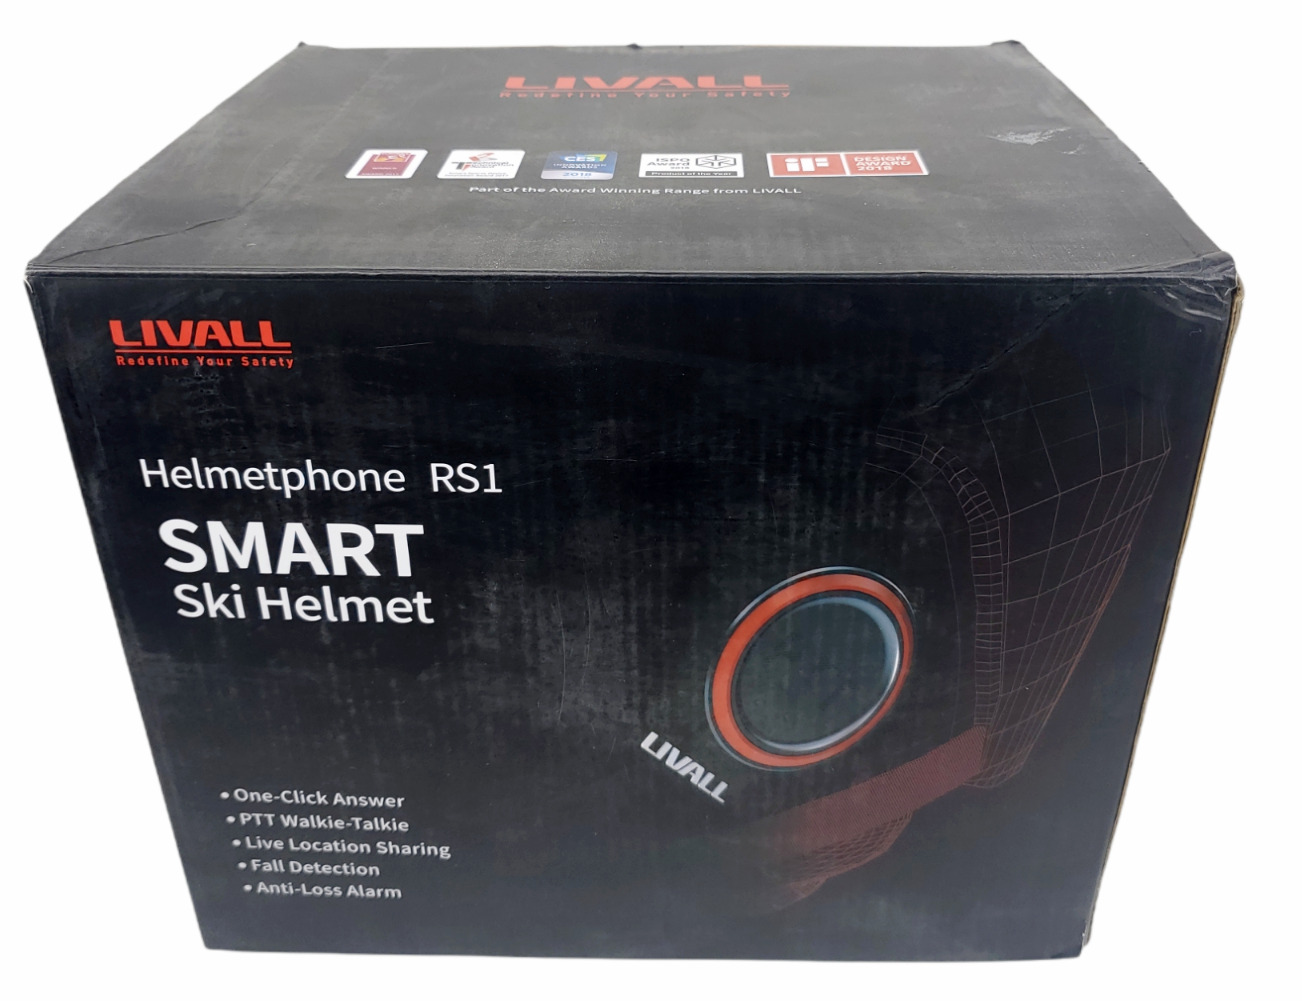 New Livall Rs1 Smart Bluetooth Ski Helmet Graphite Black Size 54-58cm Free Ship!